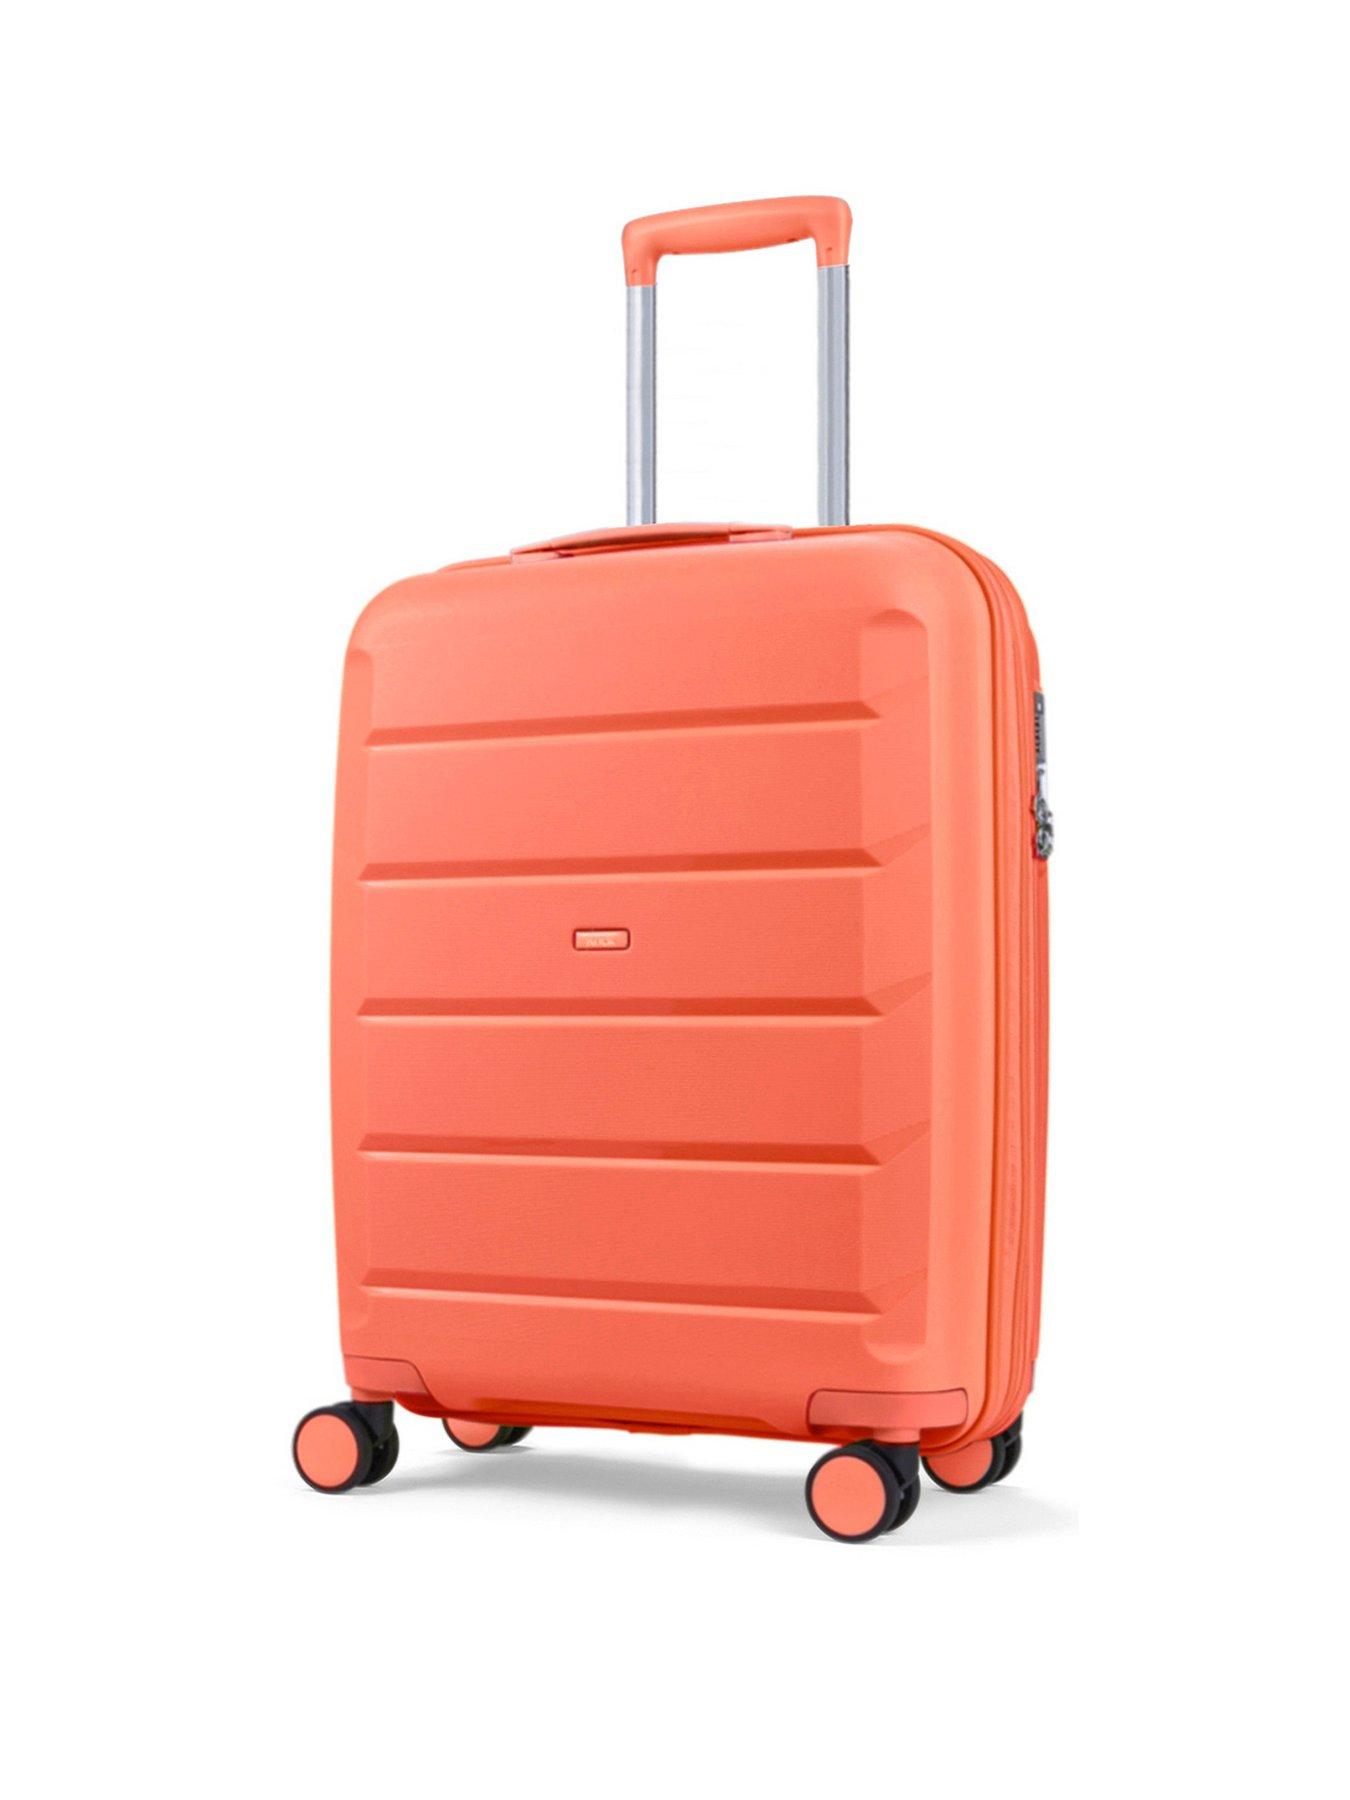 Rock Luggage Tulum Hardshell 8-Wheel Spinner Small Suitcase -Peach Echo